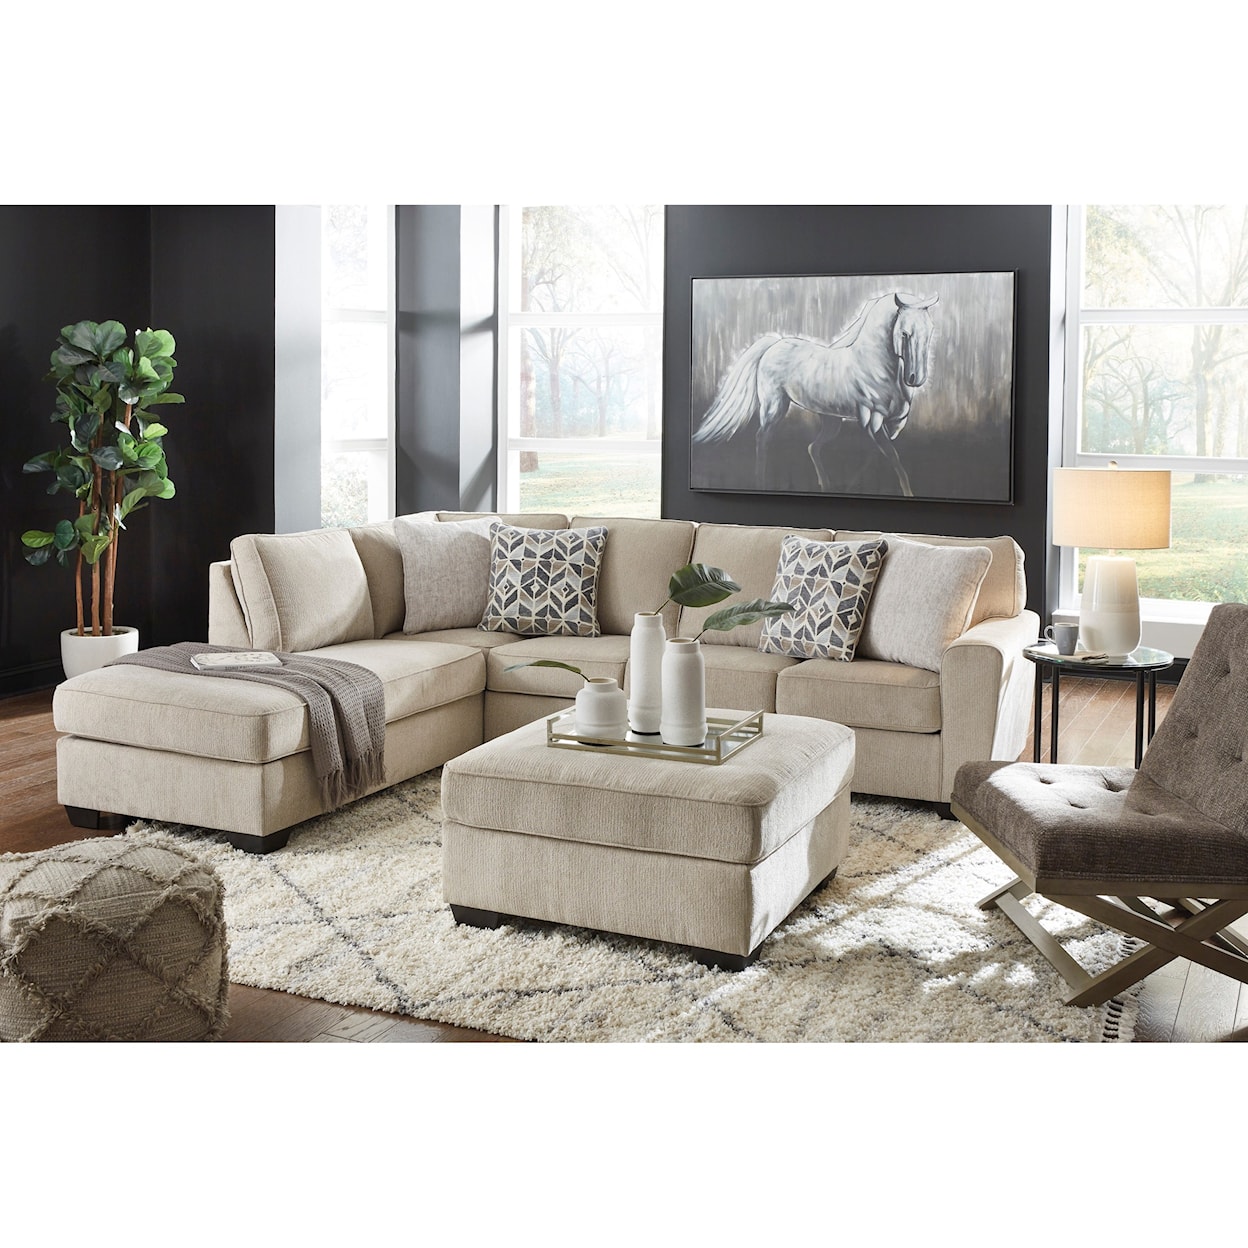 Ashley Furniture Signature Design Decelle Living Room Group